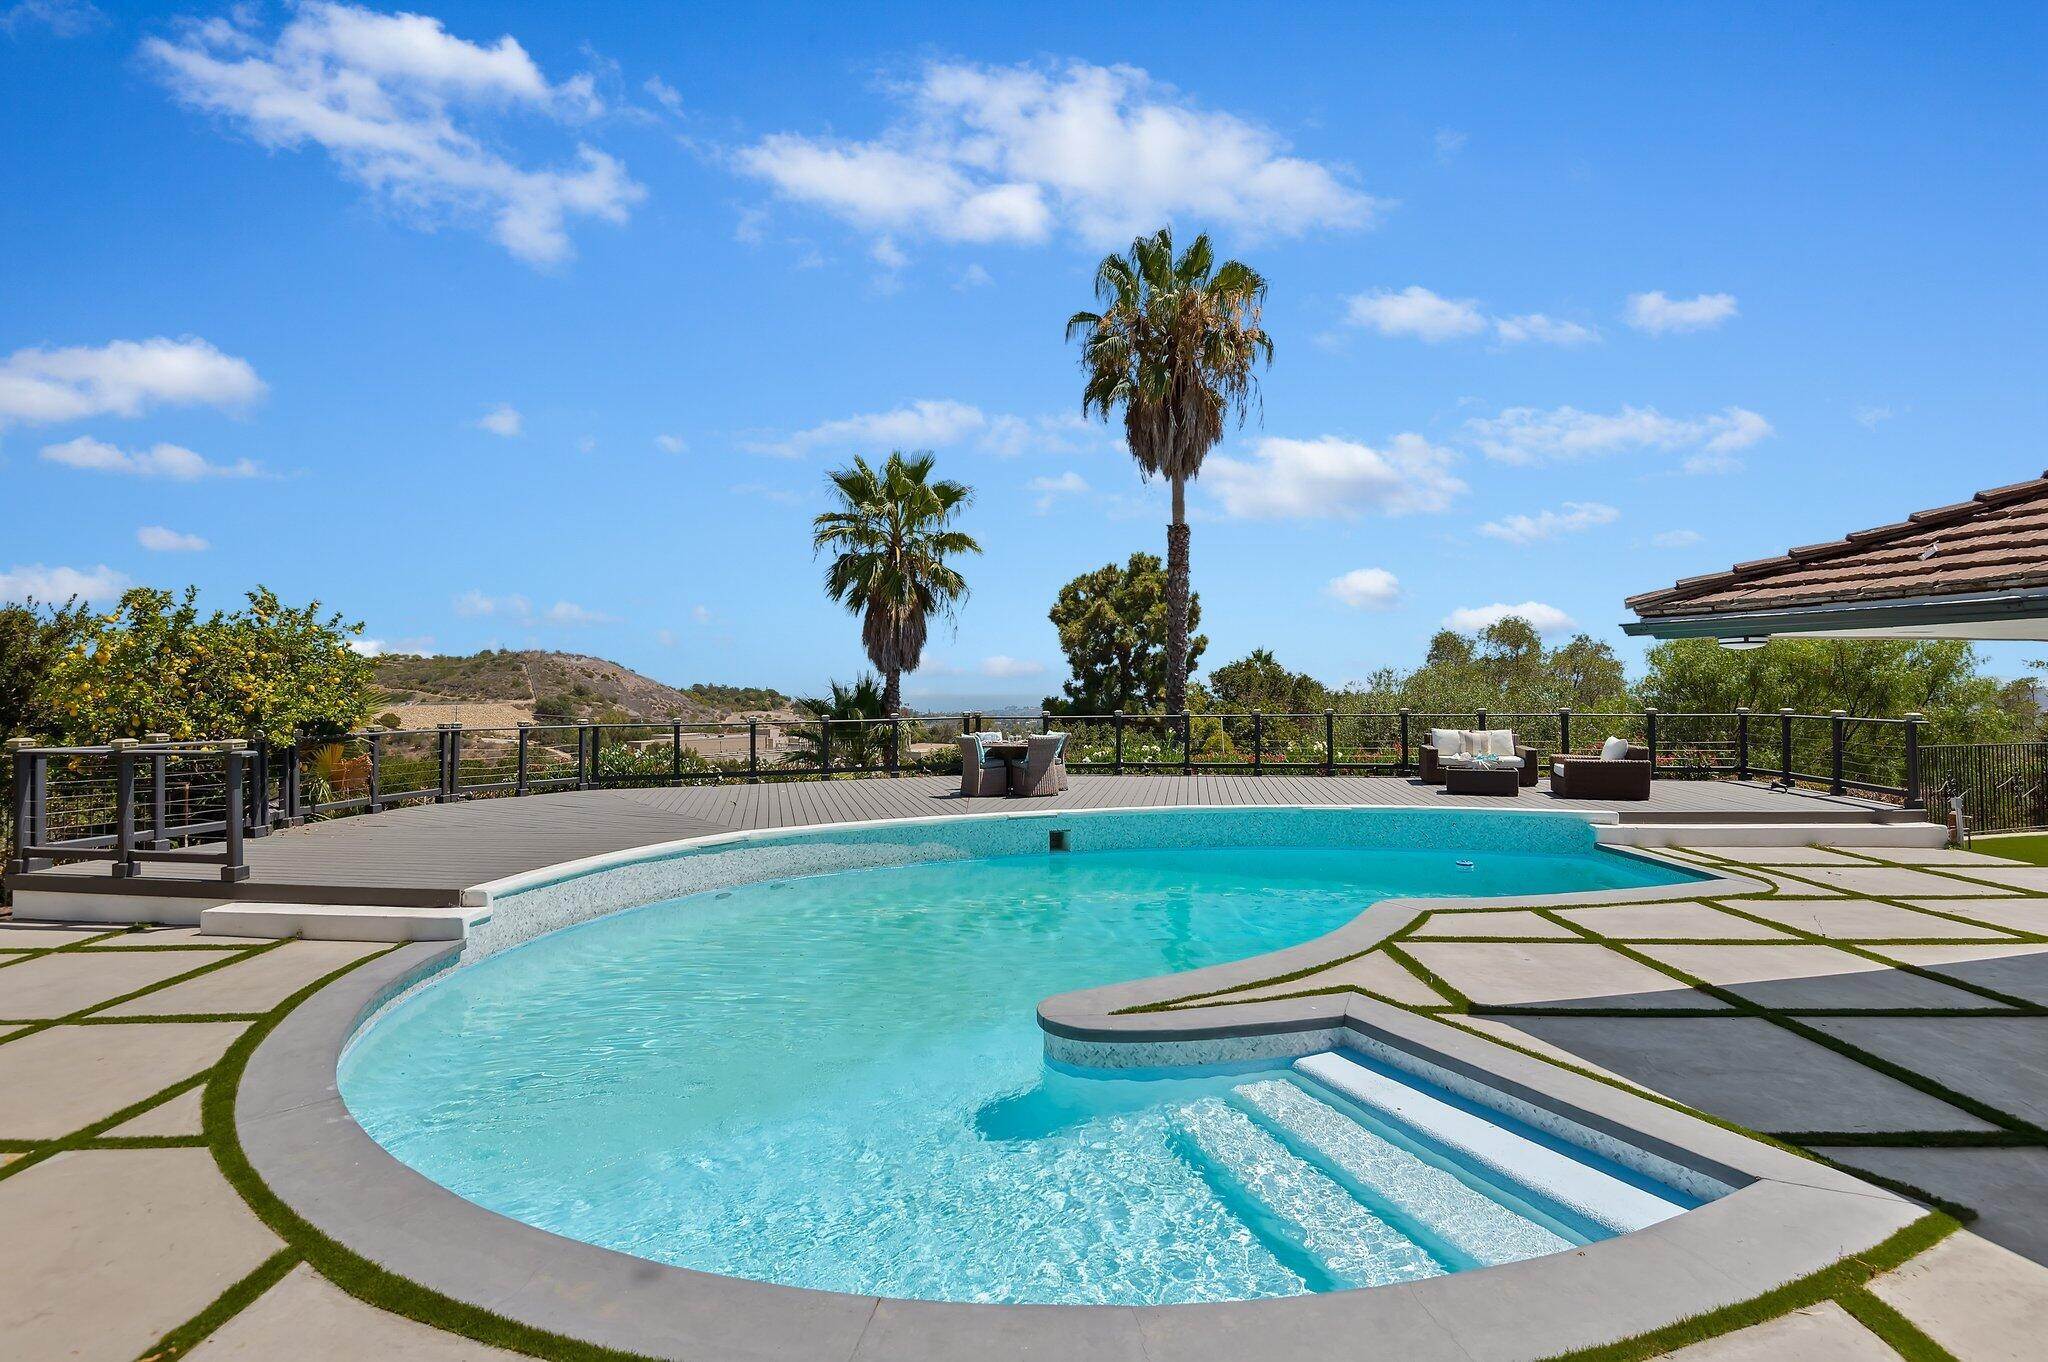 20. Estate for Sale at 8 Celine Drive Santa Barbara, California 93105 United States